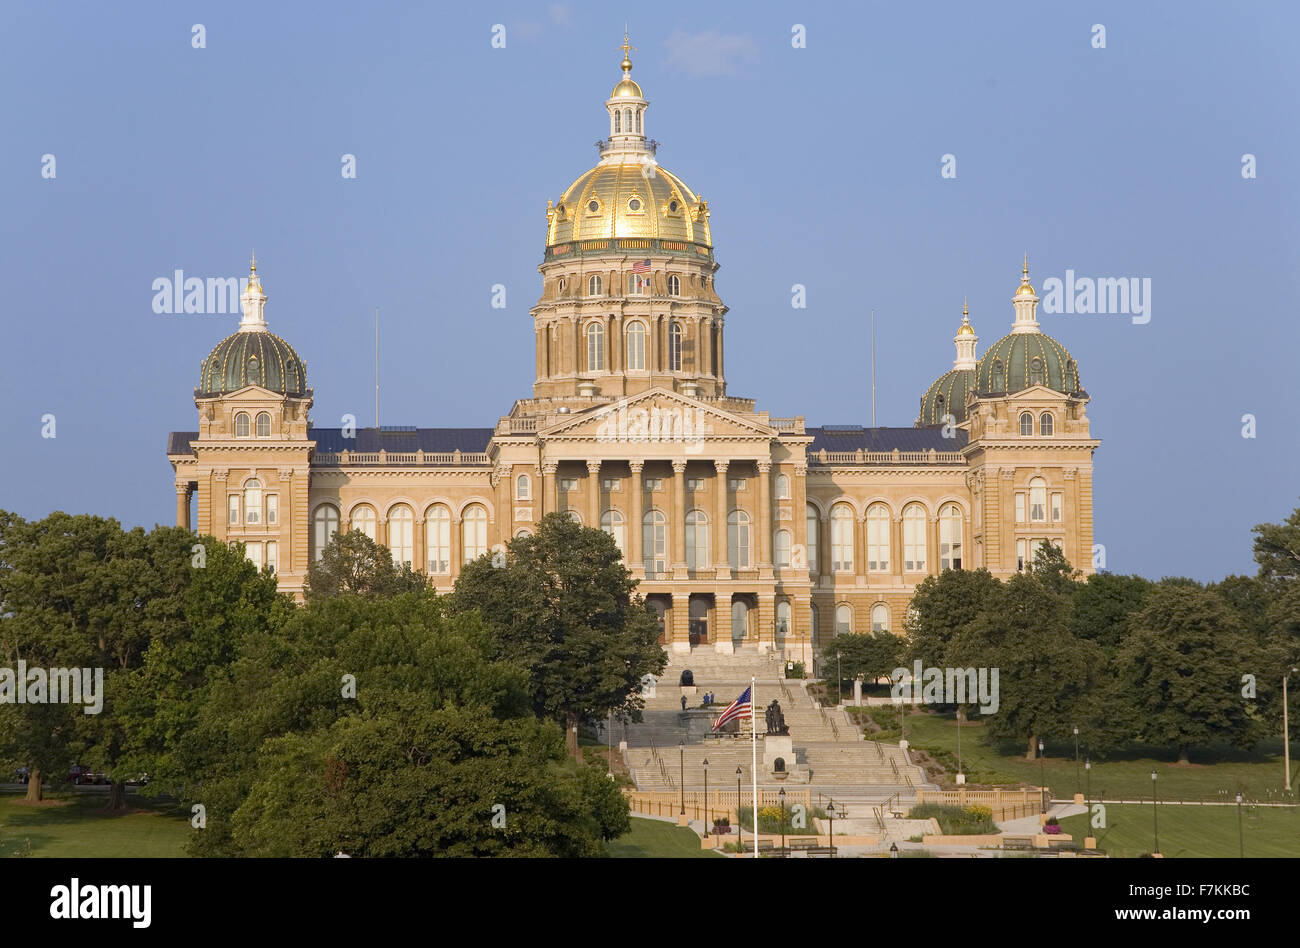 Golden dome of Iowa State Capital building, Des Moines, Iowa Stock Photo